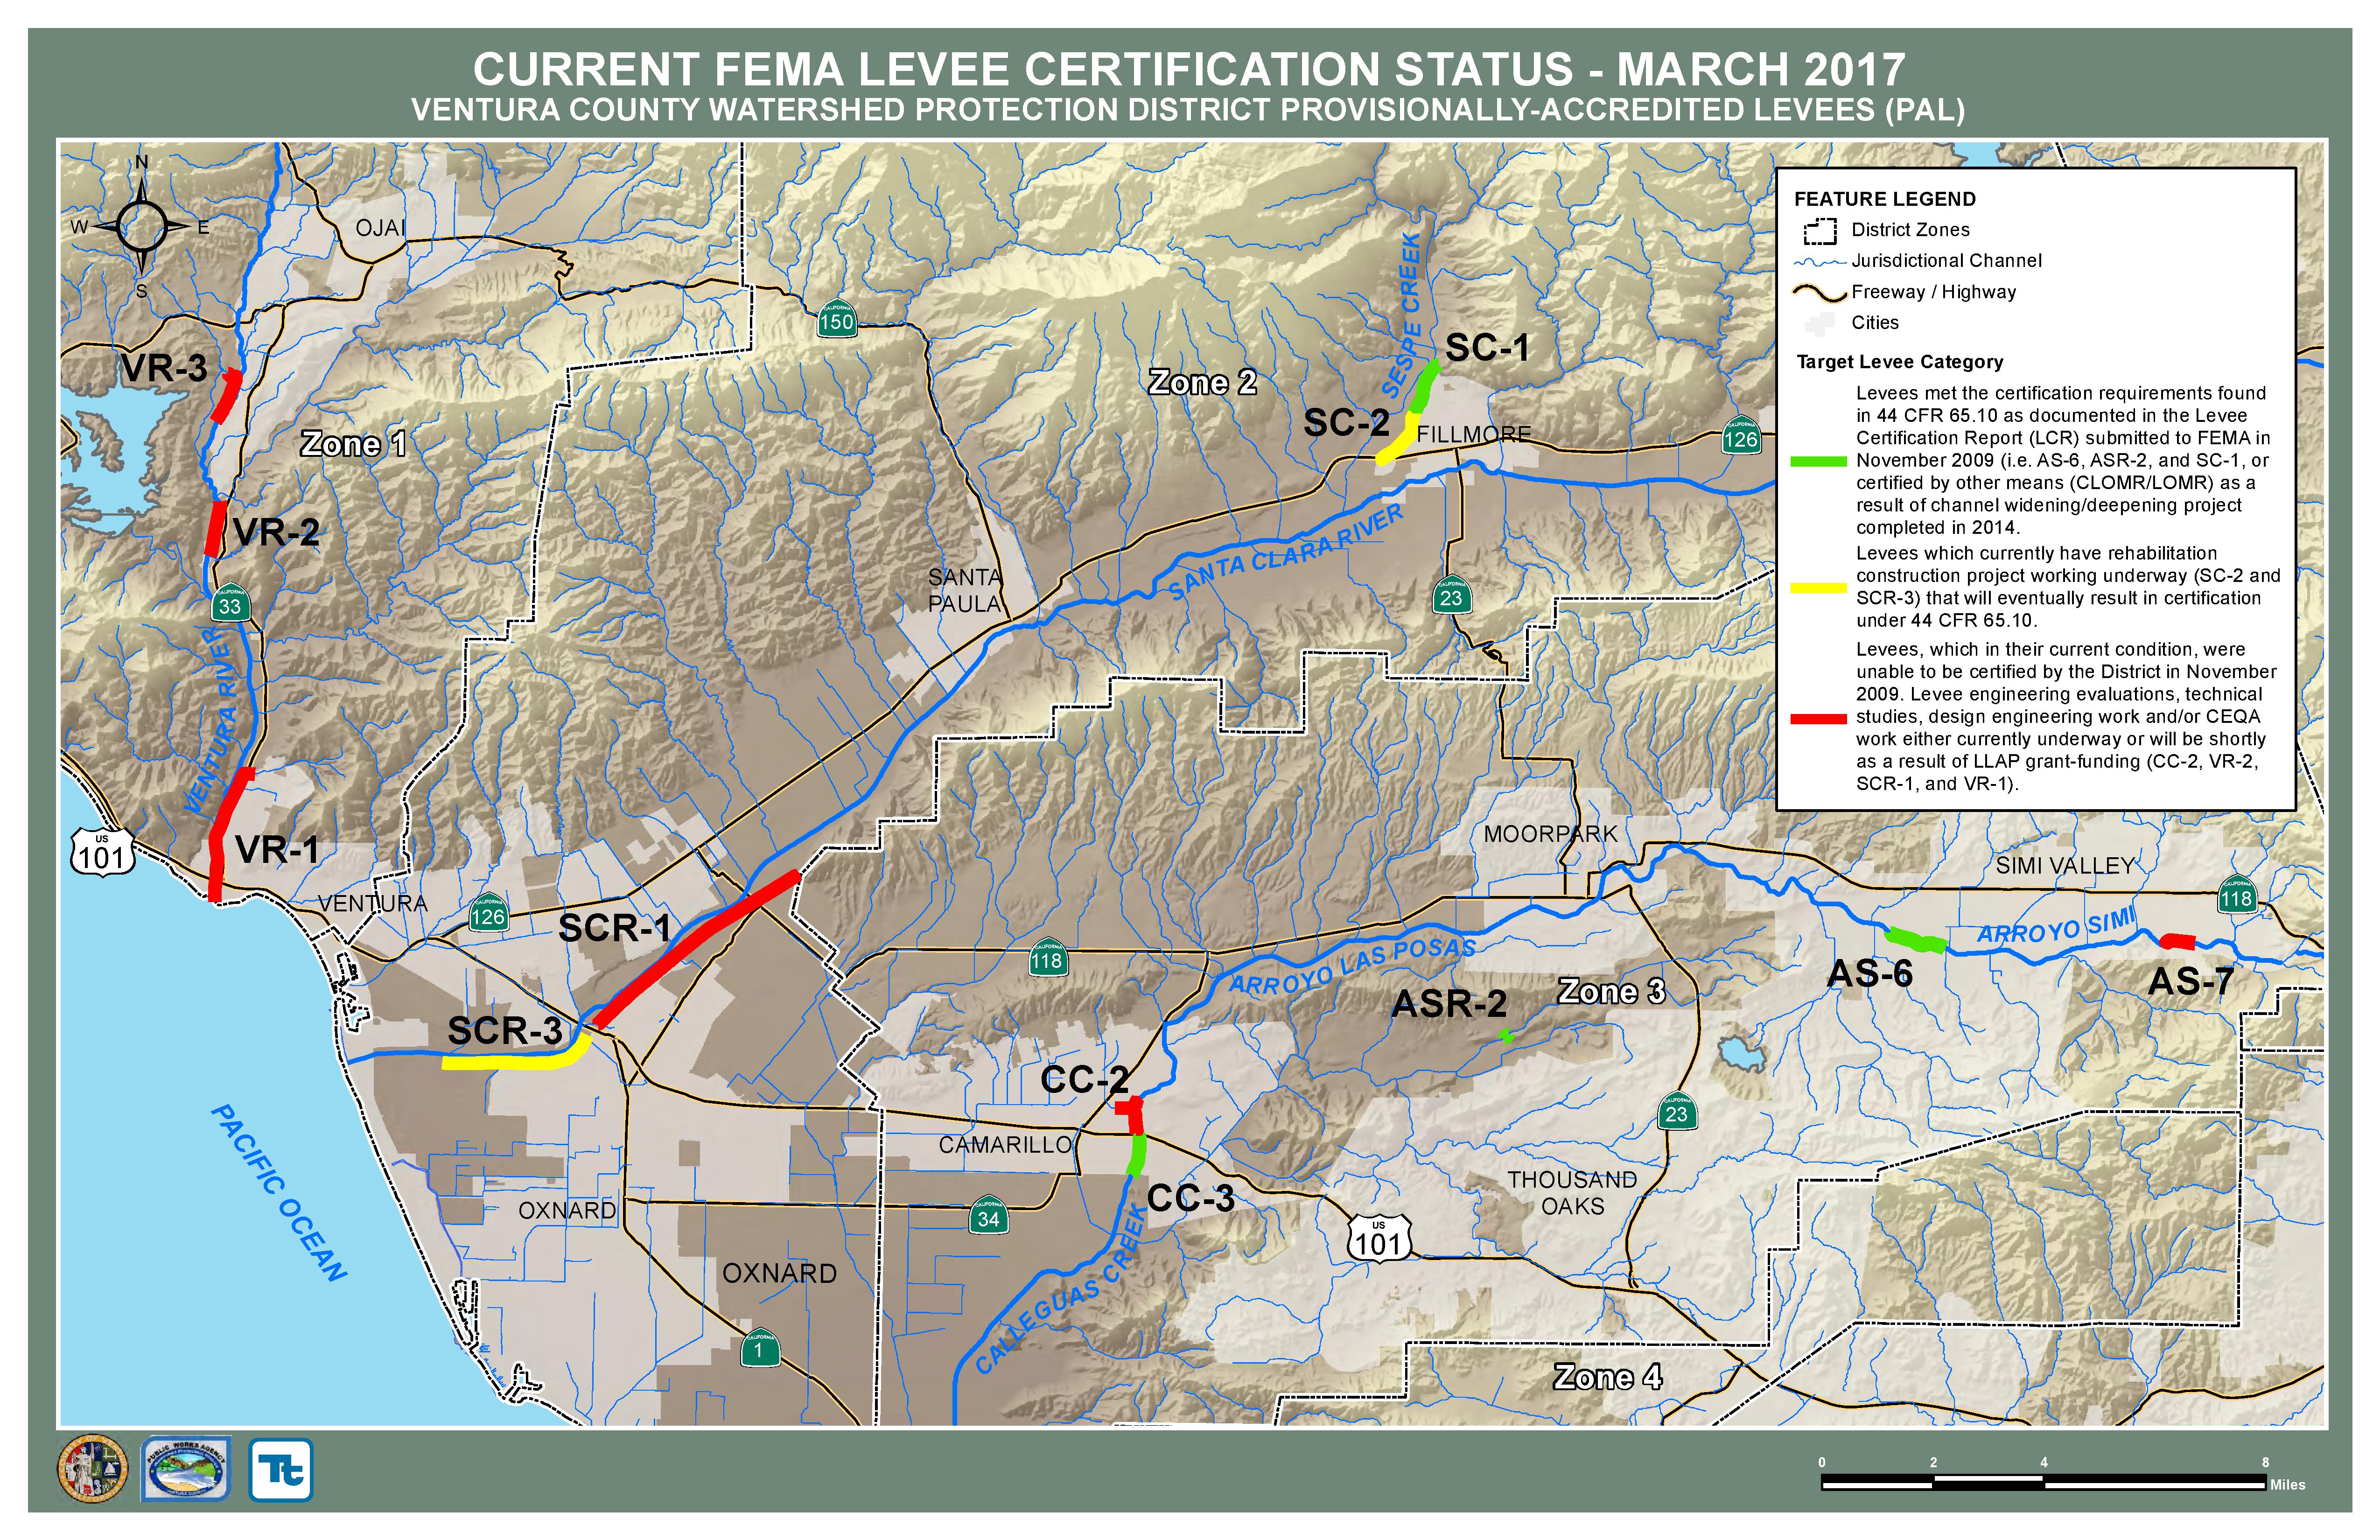 CURRENT FEMA LEVEE CERTIFICATION STATUS - MARCH 2017